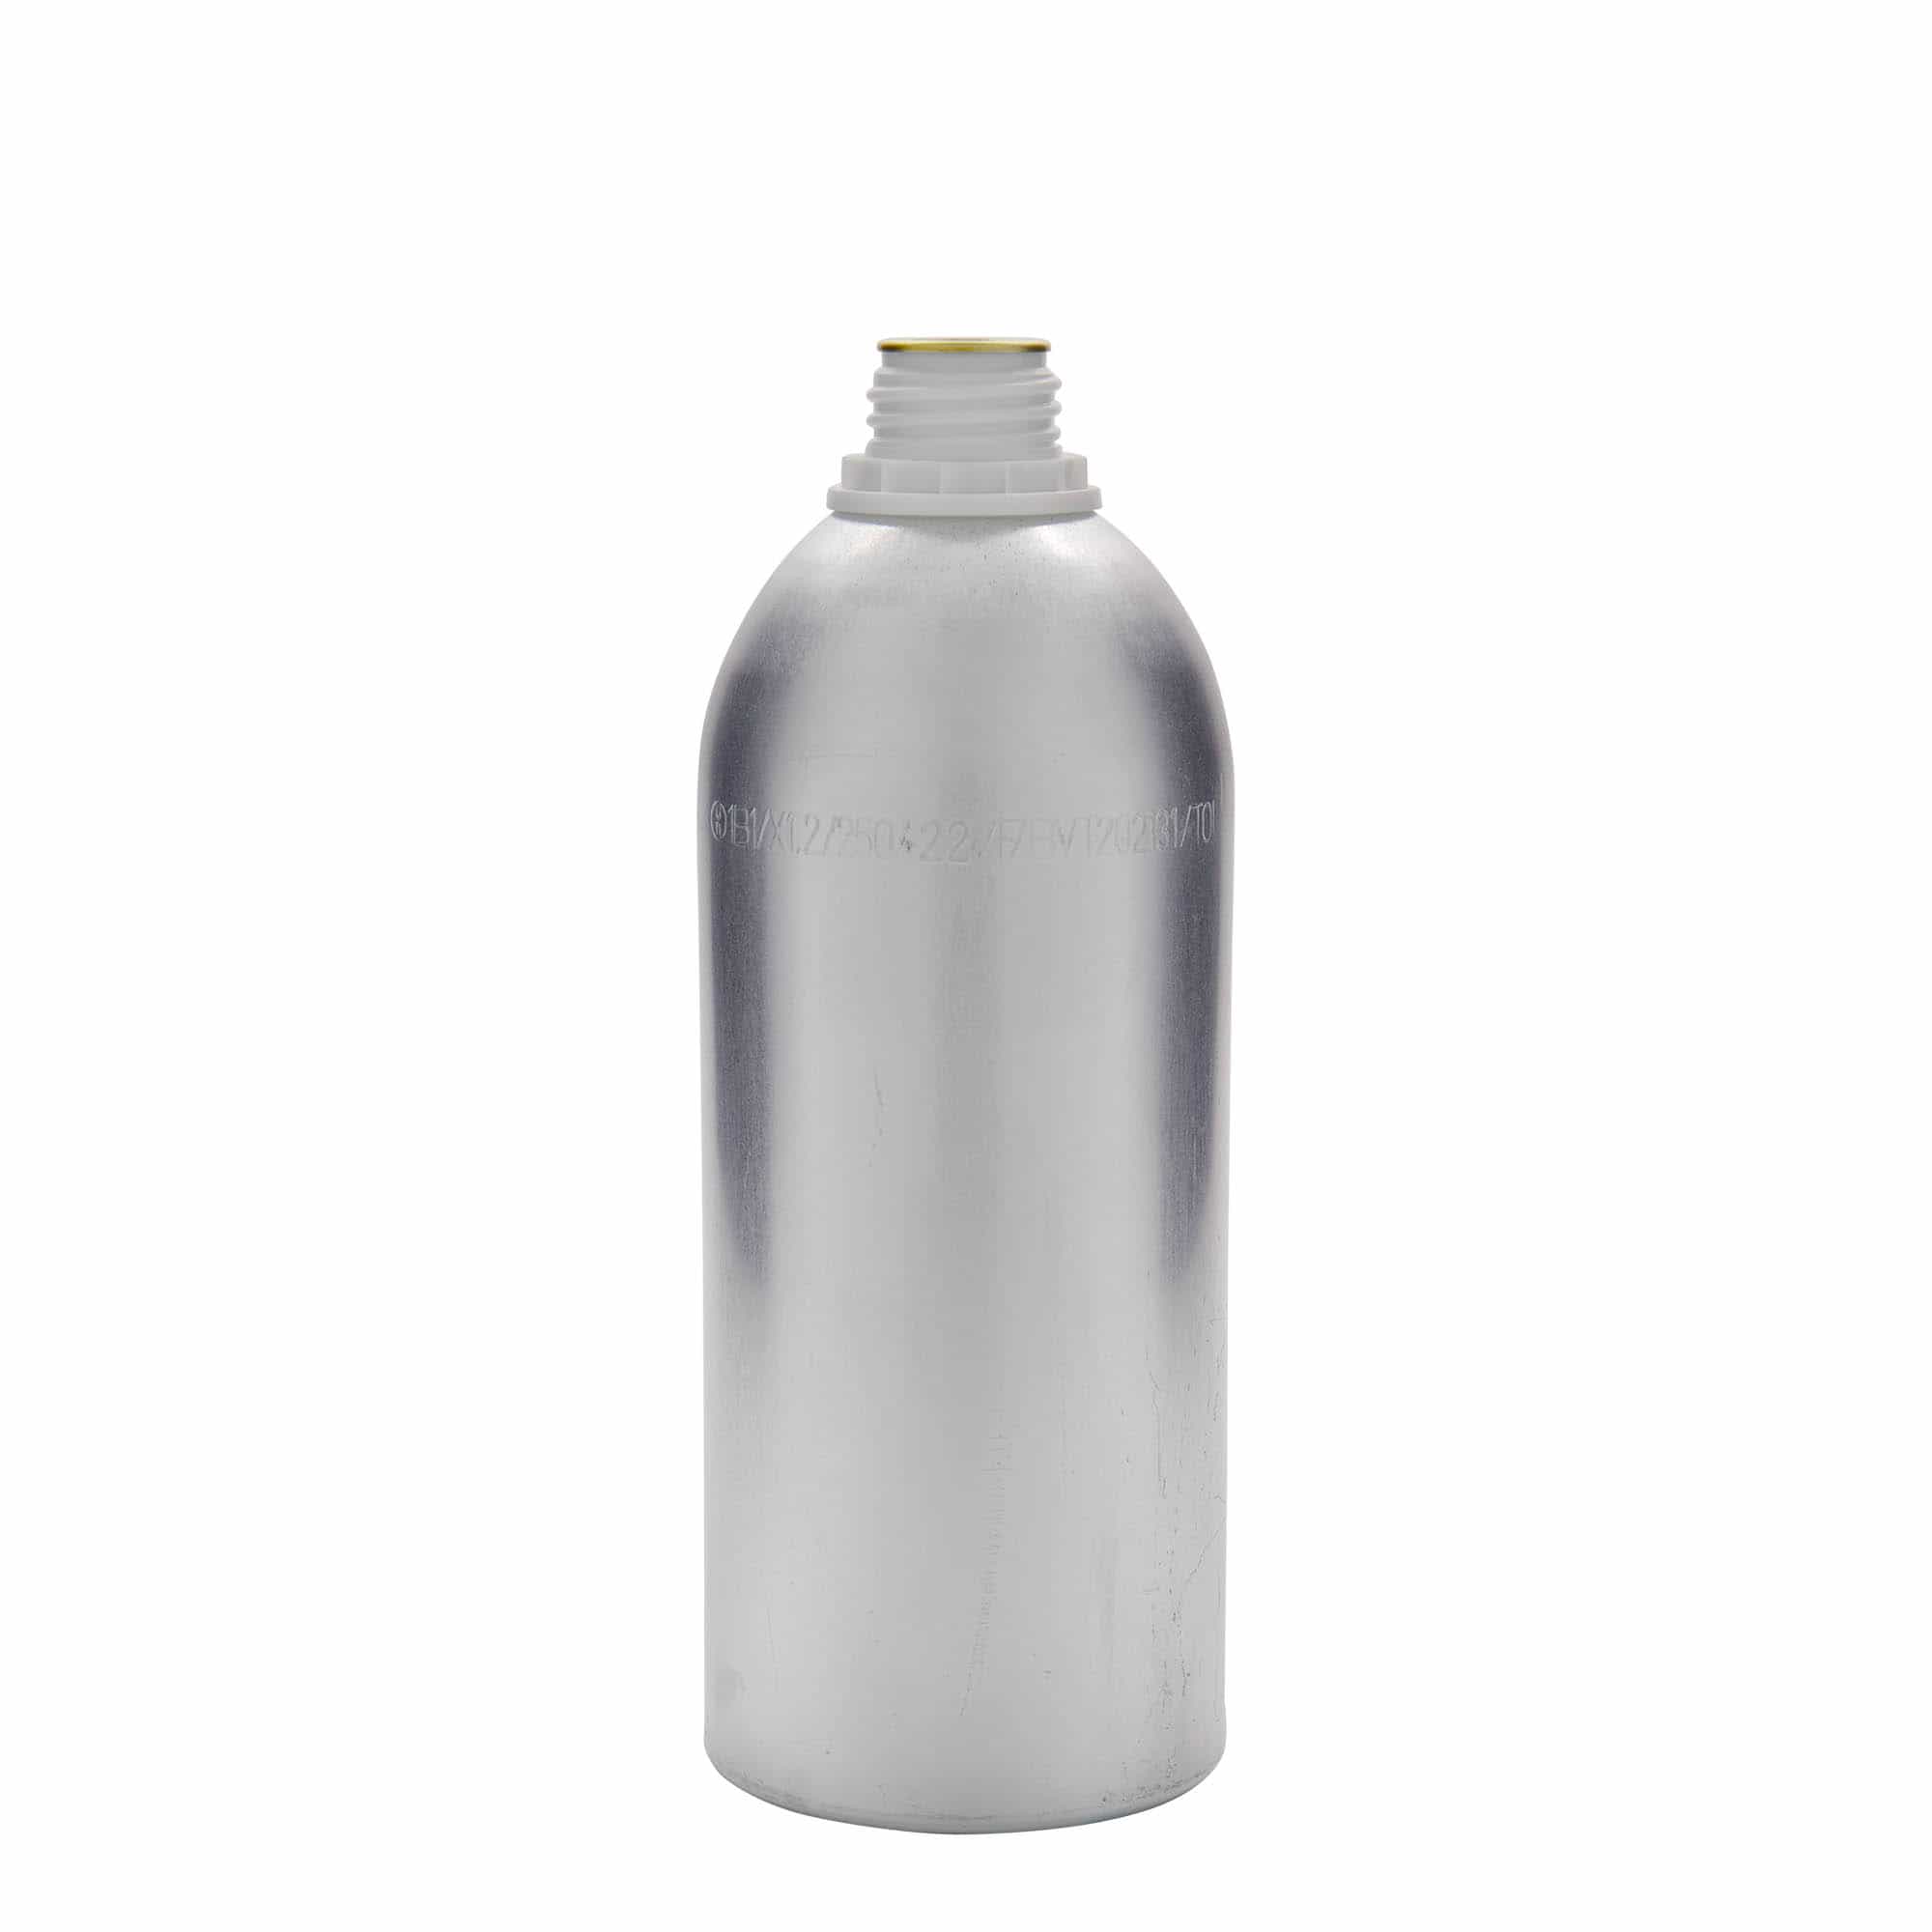 1100 ml aluminium bottle, metal, silver, closure: DIN 32